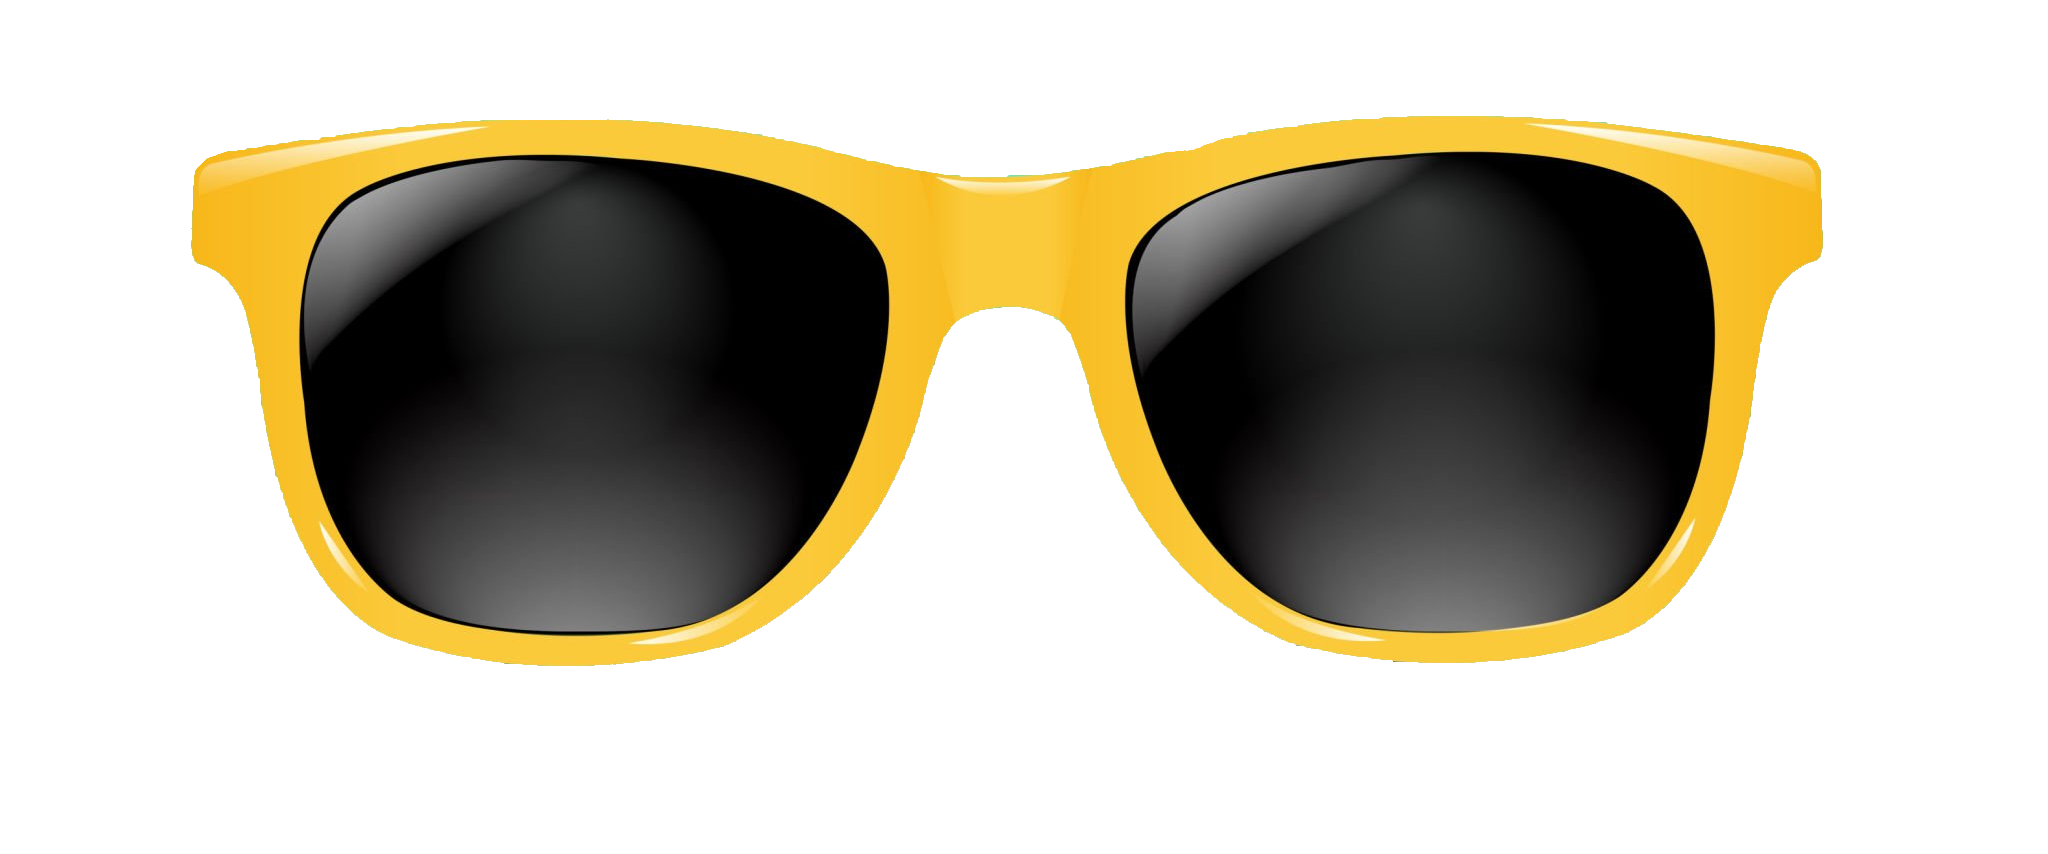 sunglasses-66